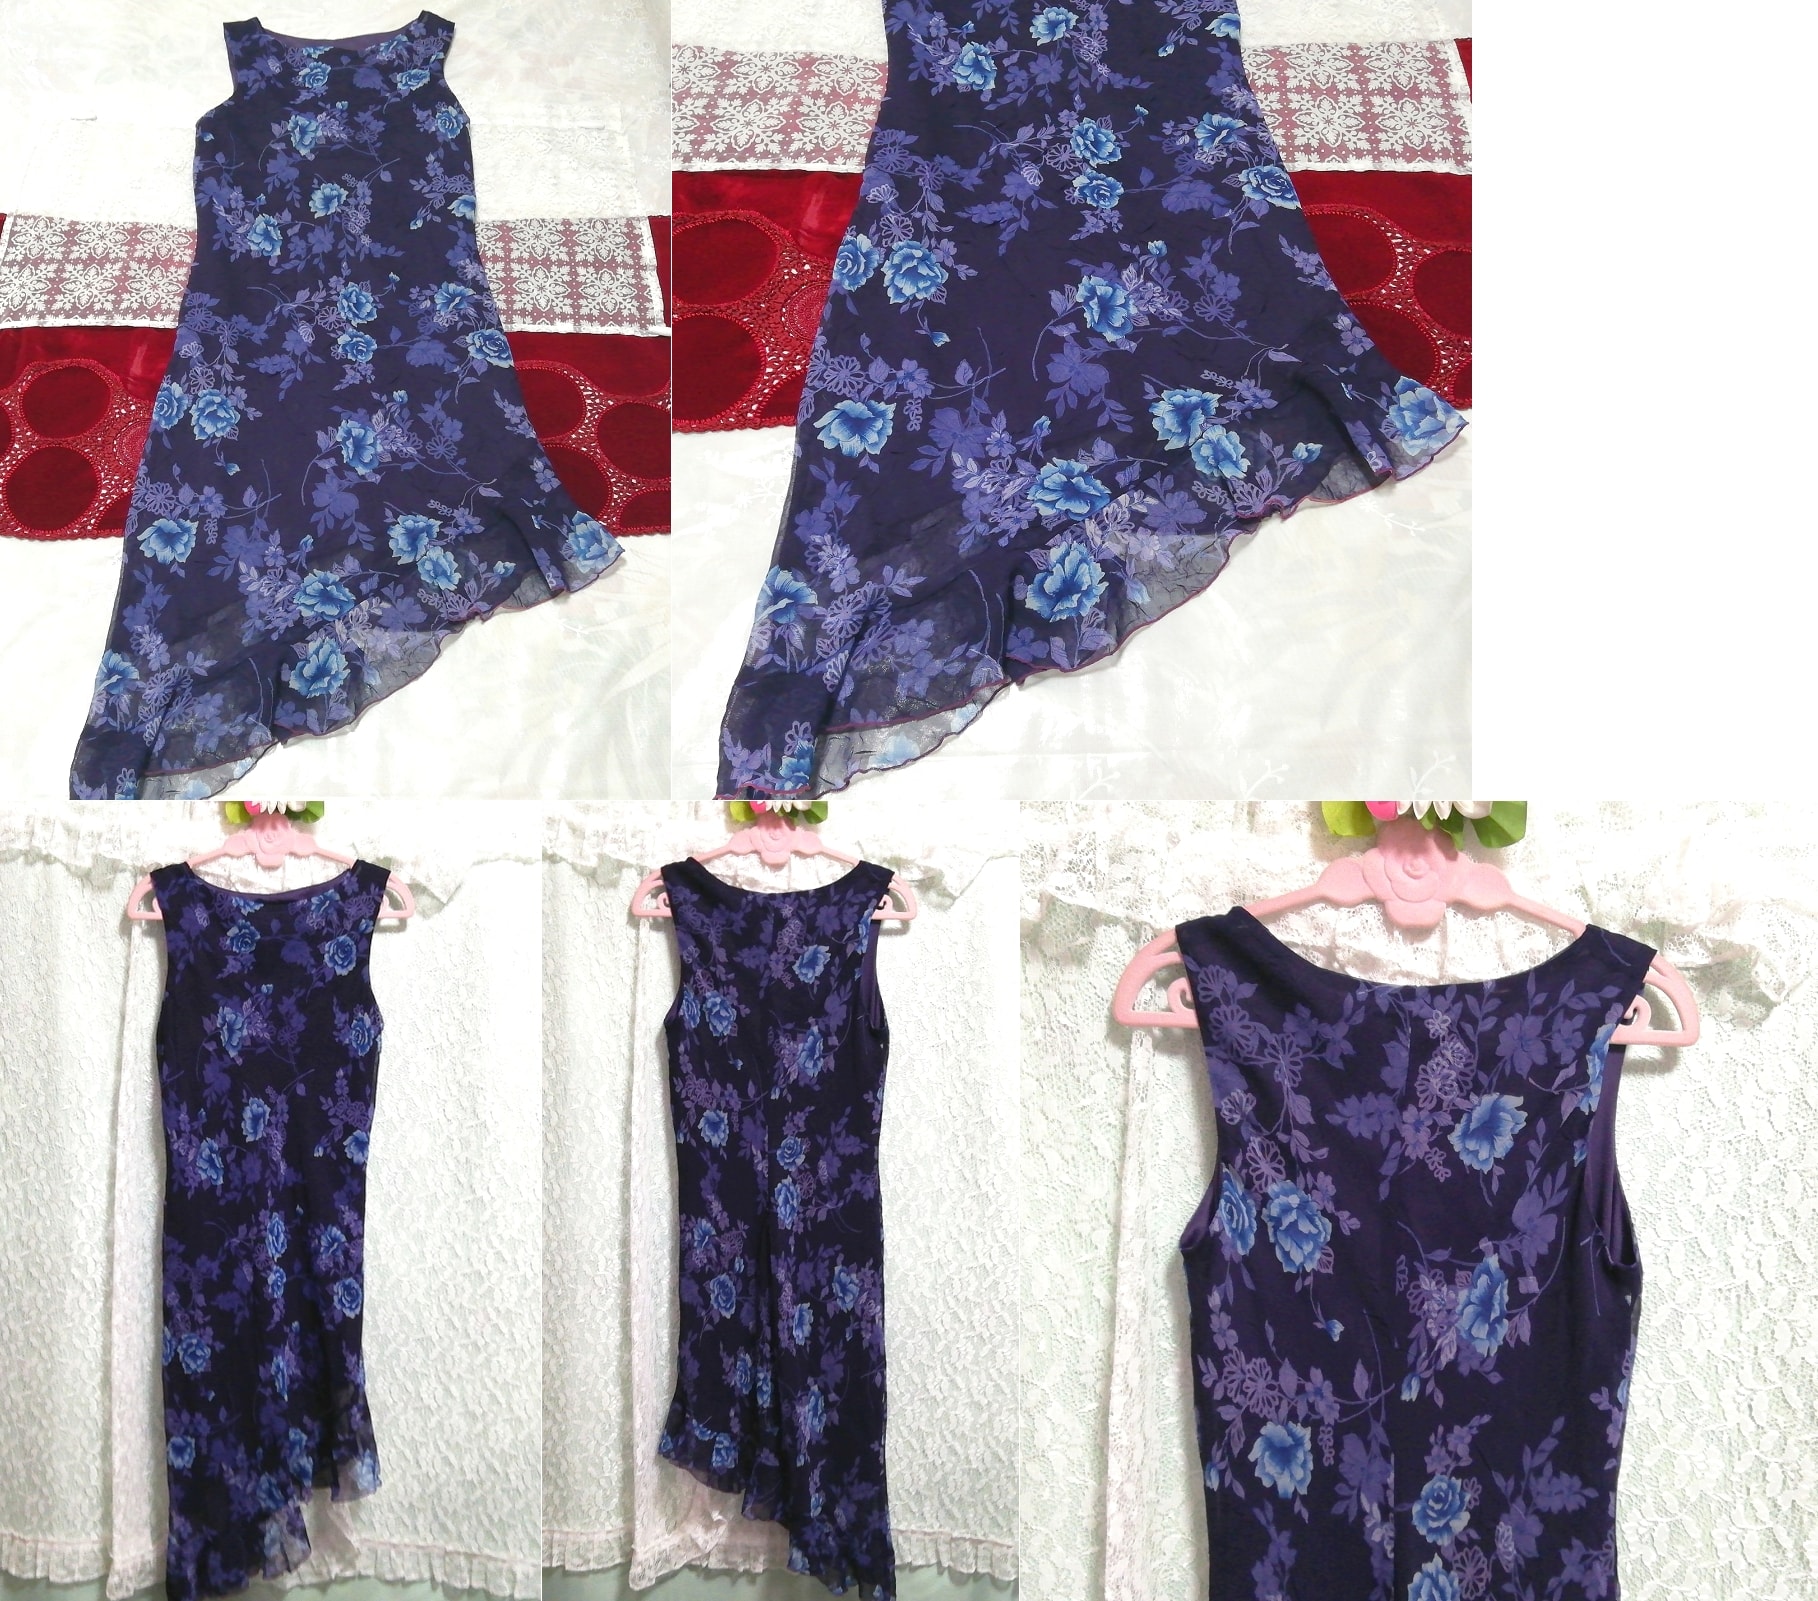 Navy floral pattern chiffon sleeveless negligee nightgown nightwear half dress, knee length skirt, m size